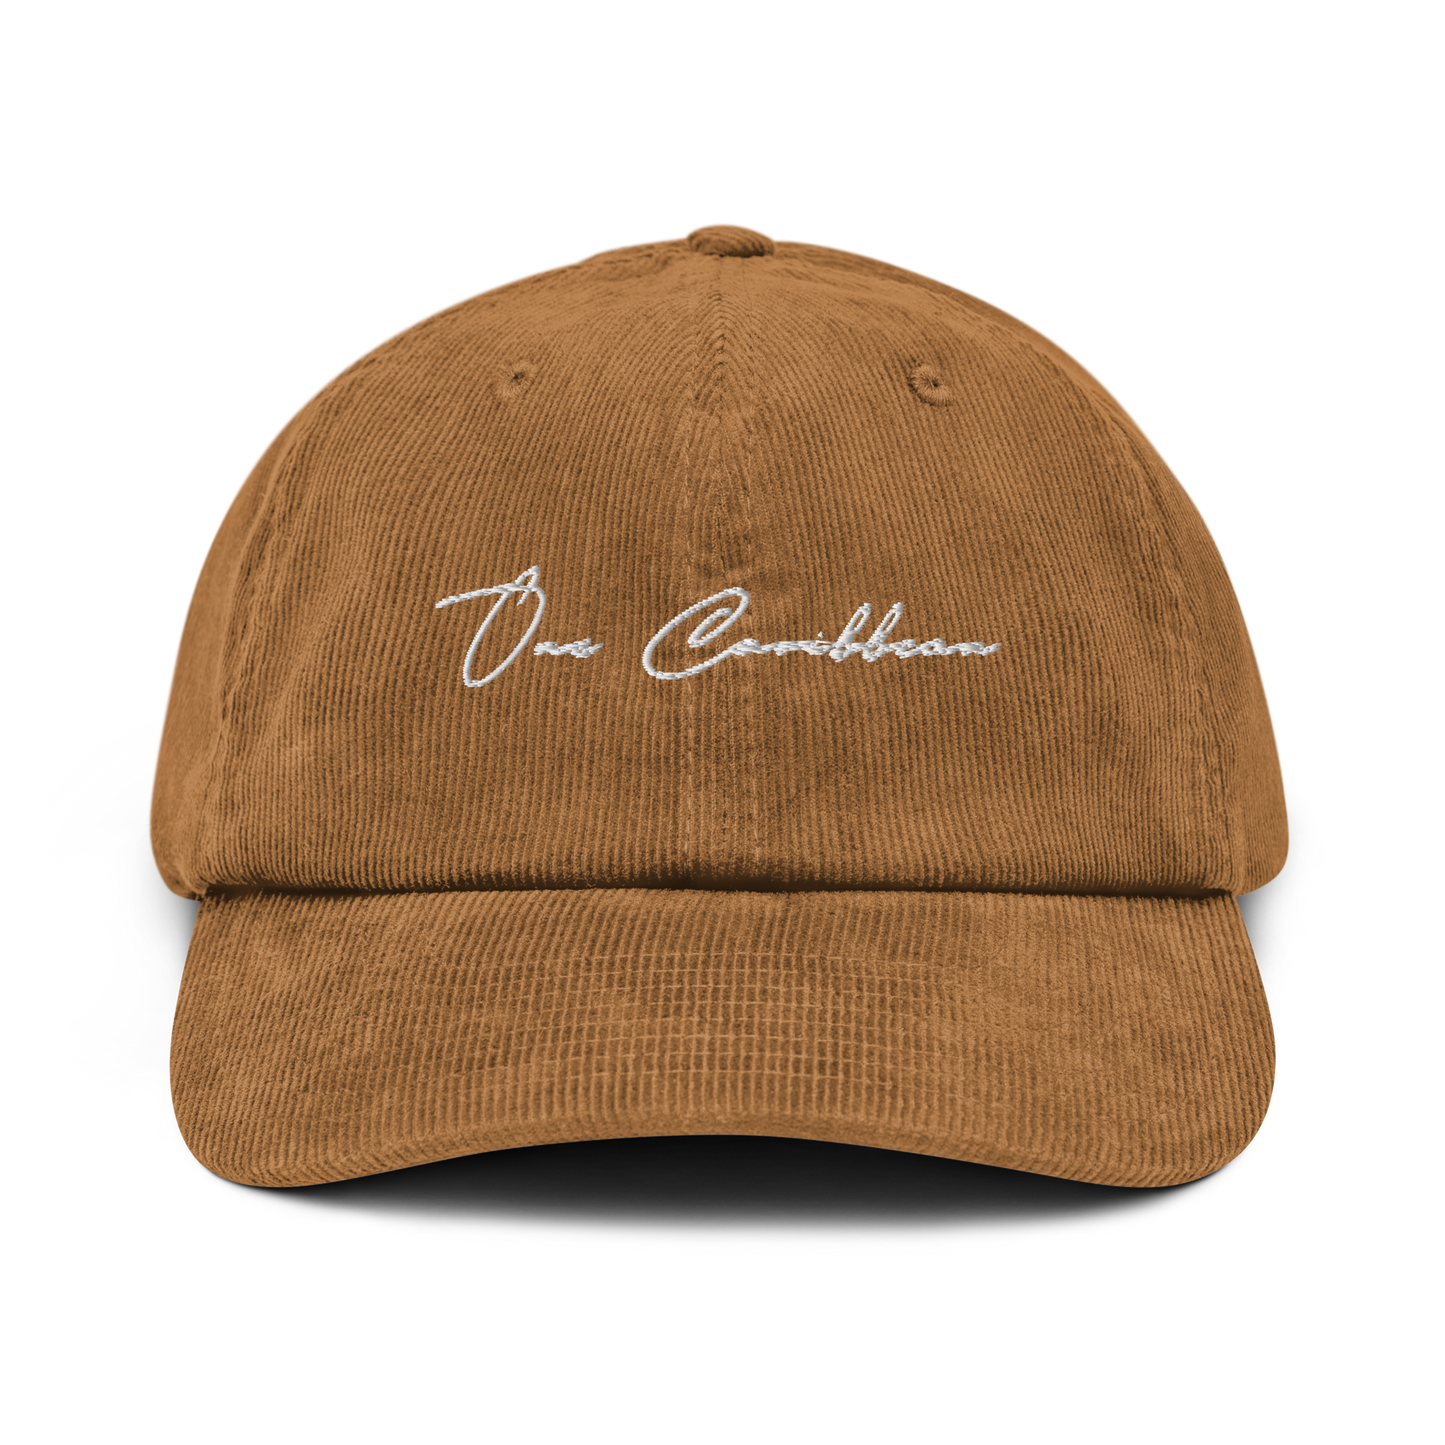 One Caribbean Corduroy Hat